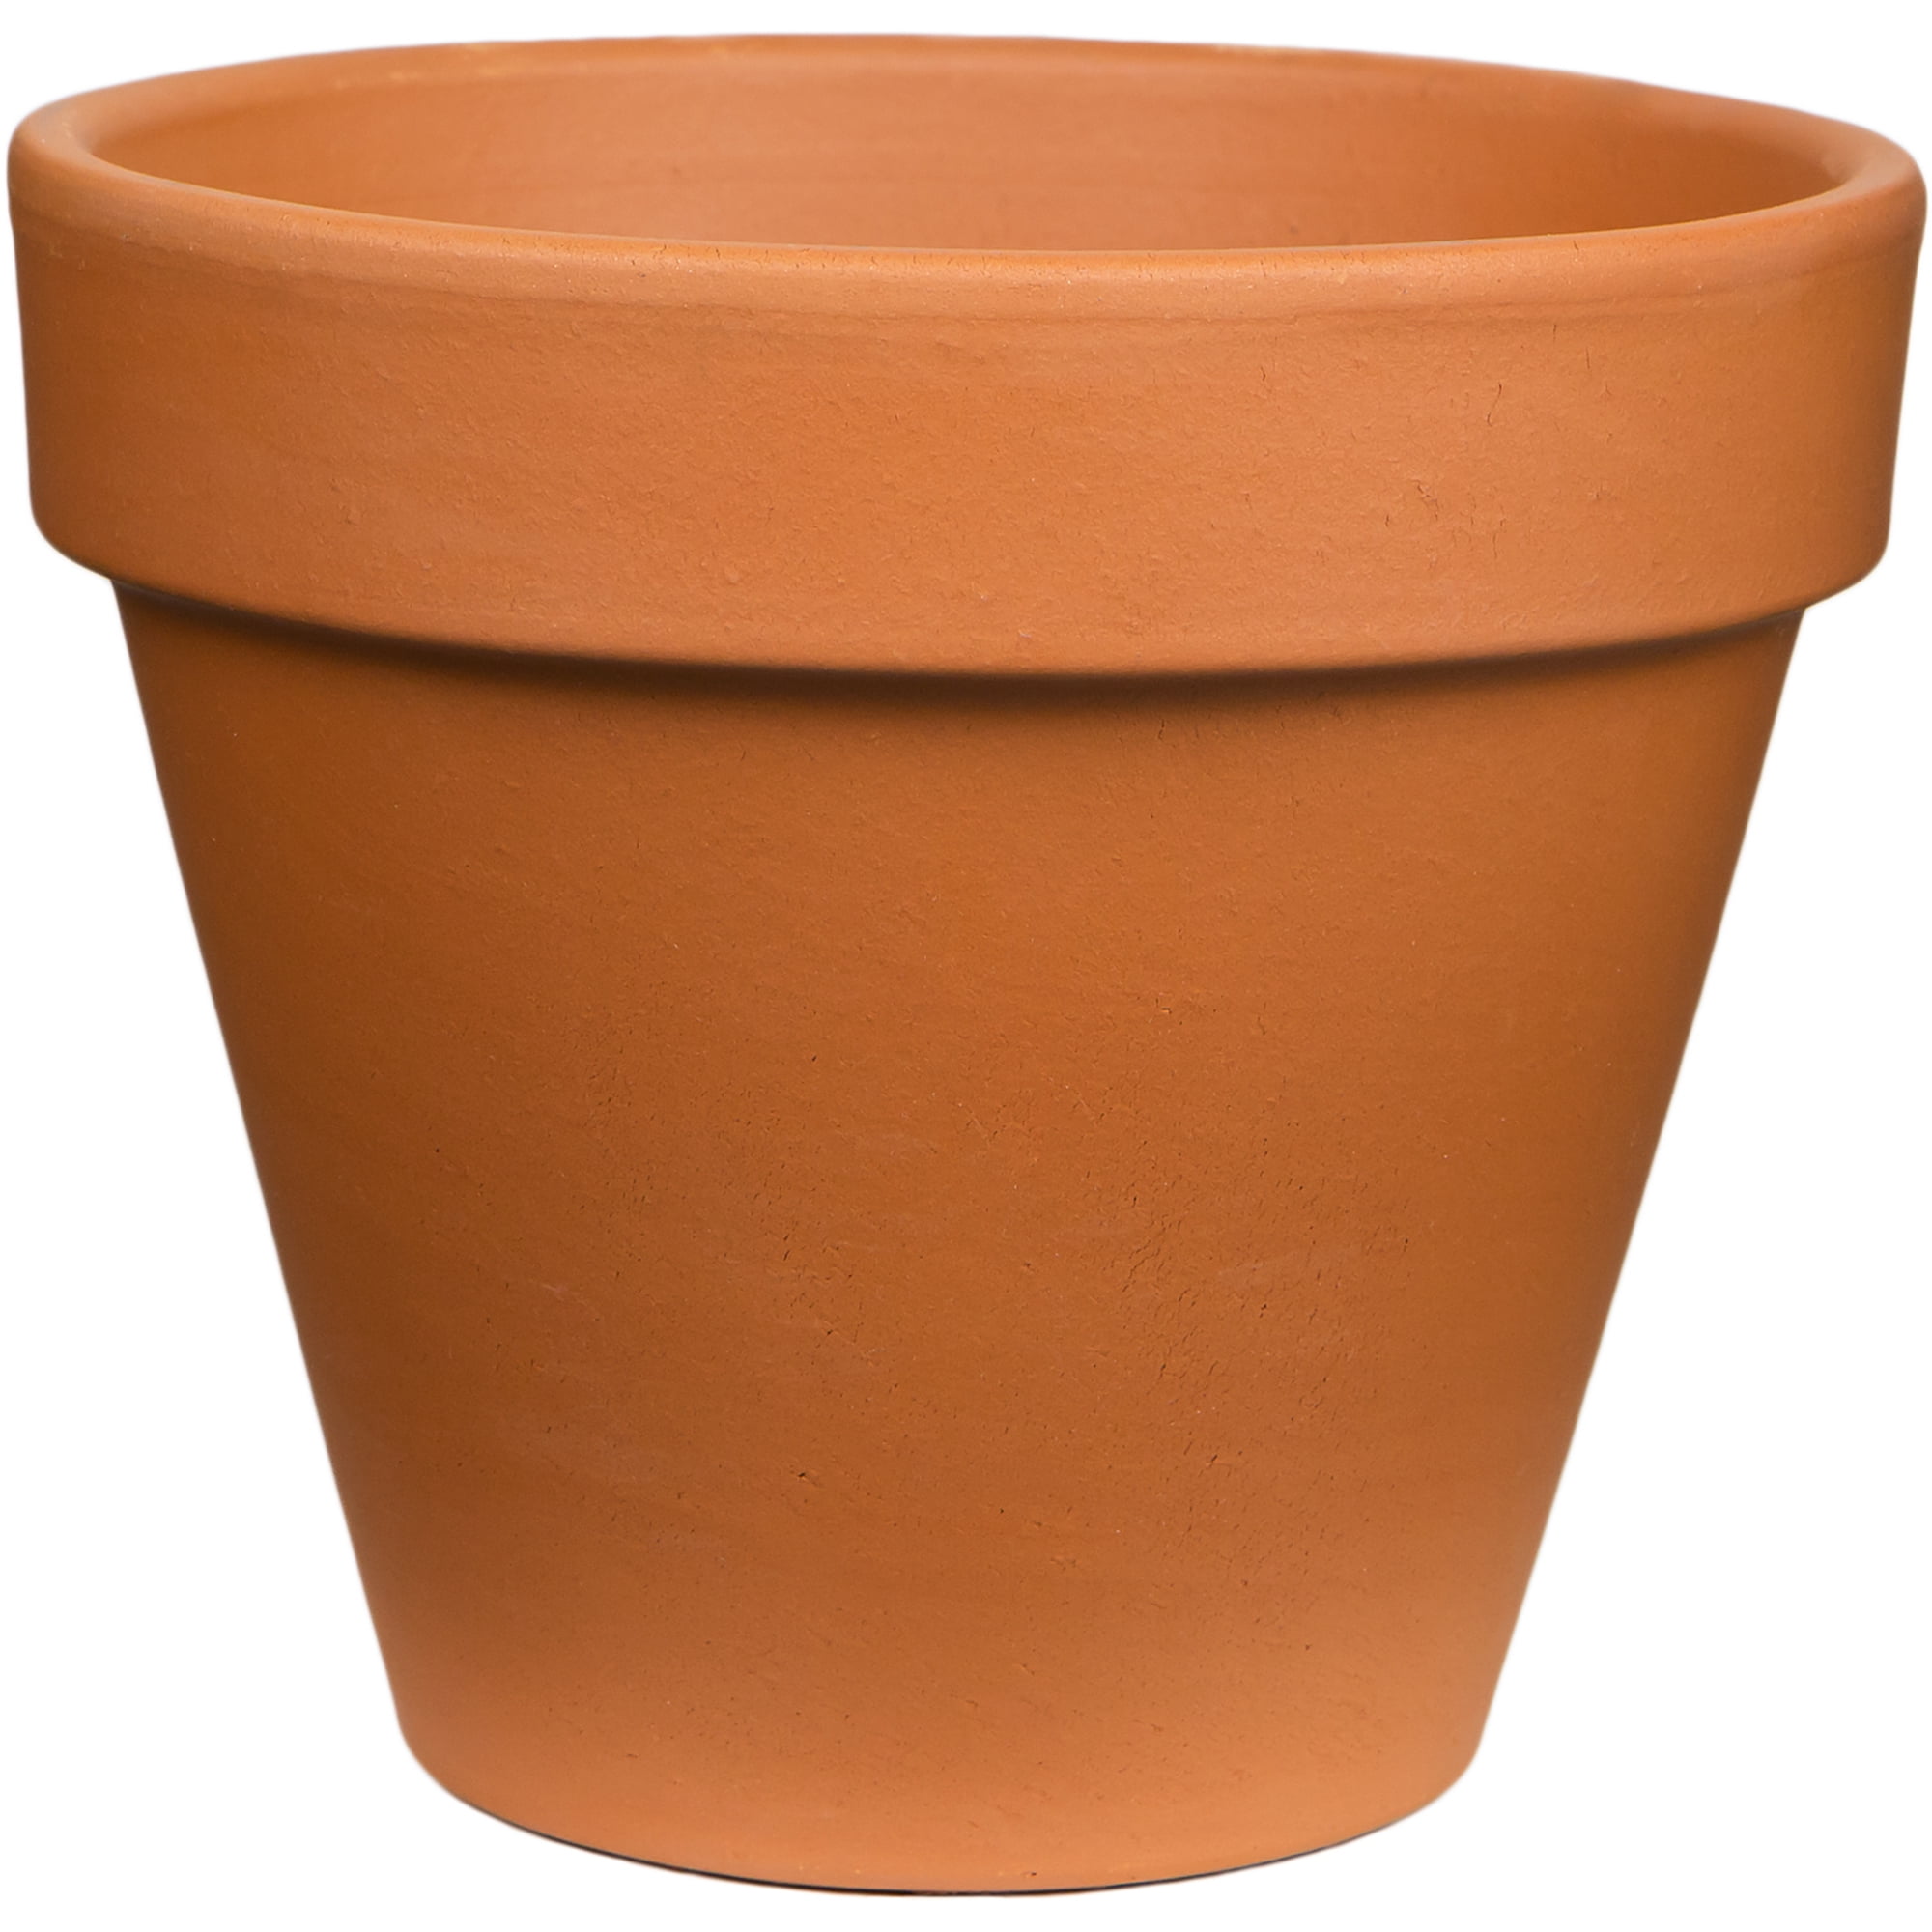 Pennington Terra Cotta  Clay Pot  Planter 6 inch Walmart com